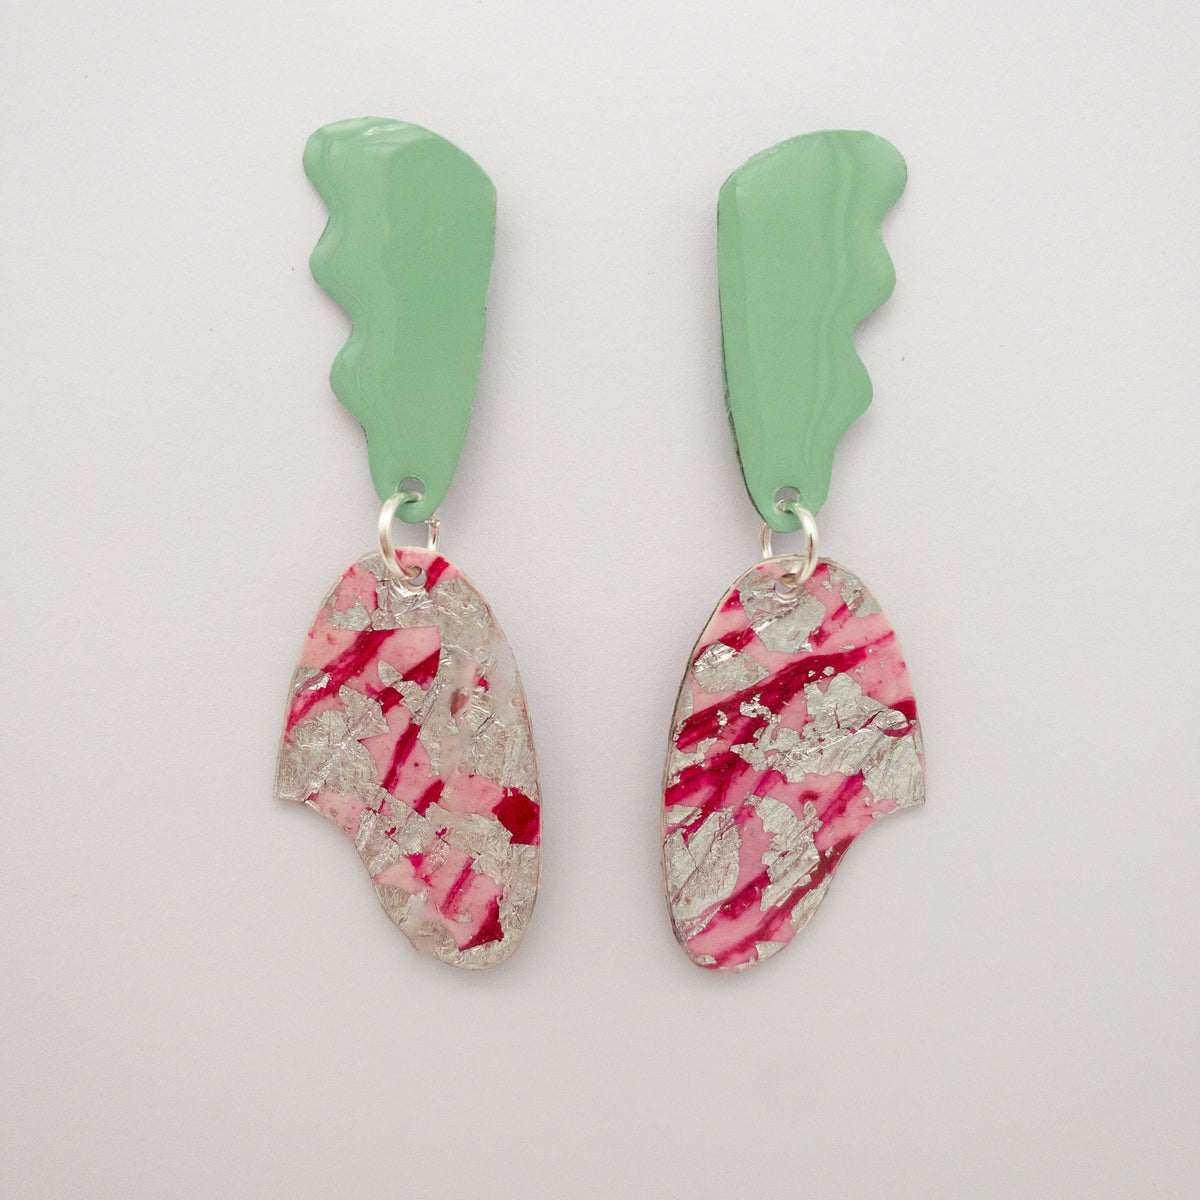 Tidal sgraffito textile earrings in seafoam/pink/silver